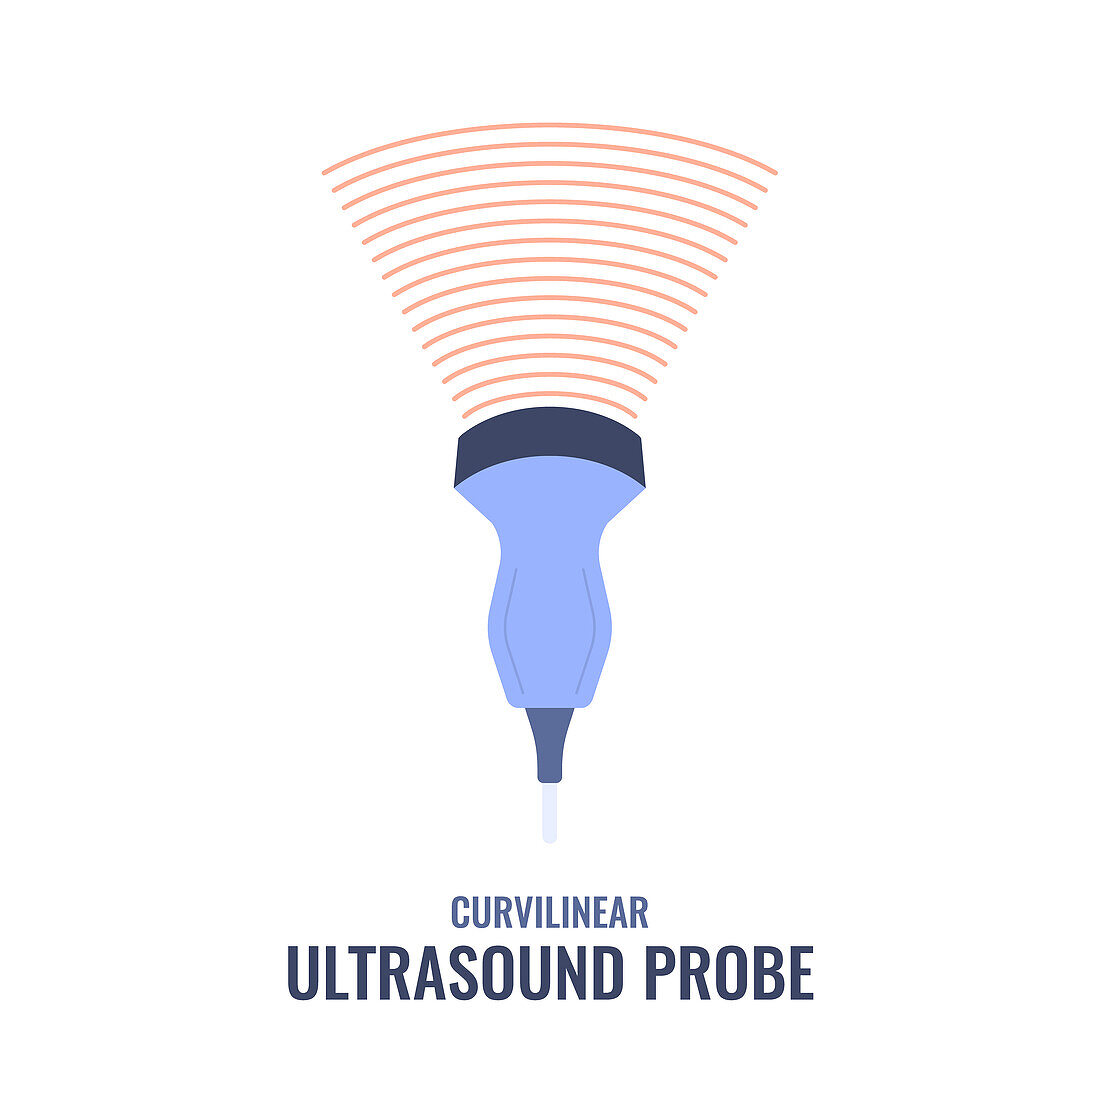 Curvilinear ultrasound probe, illustration